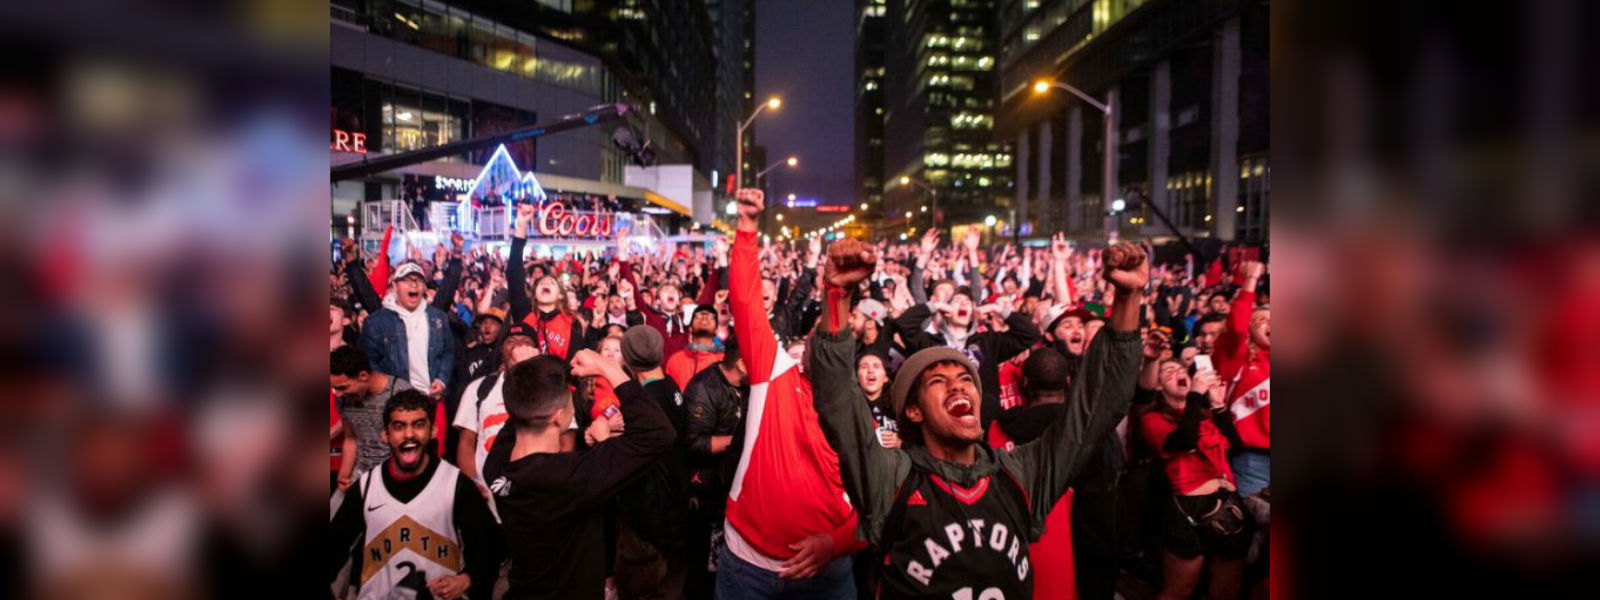 Toronto Raptors fans party in street after reaching NBA finals